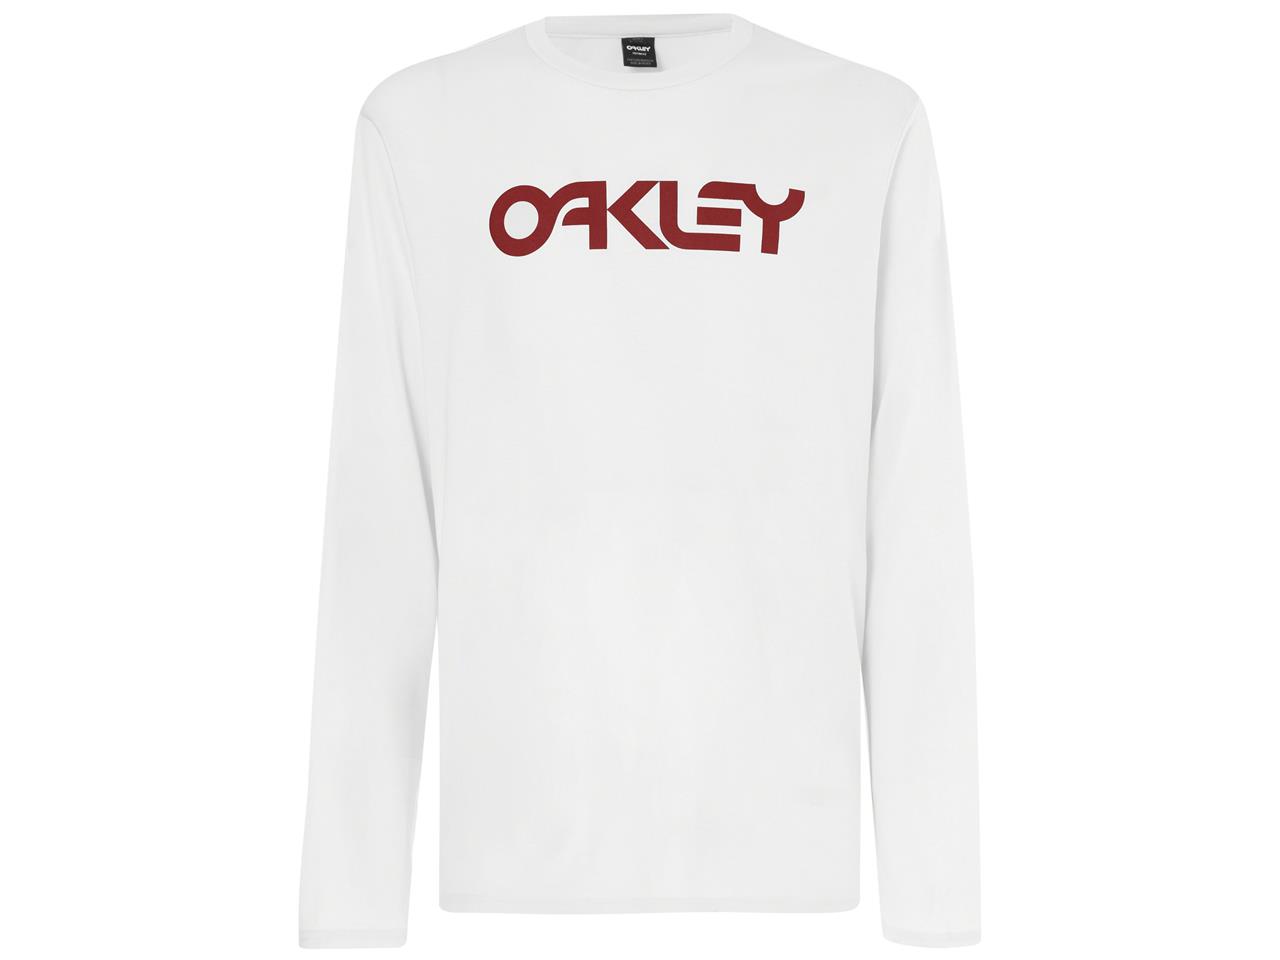 T-Shirt marque Oakley Mark II manche longue couleur blanc